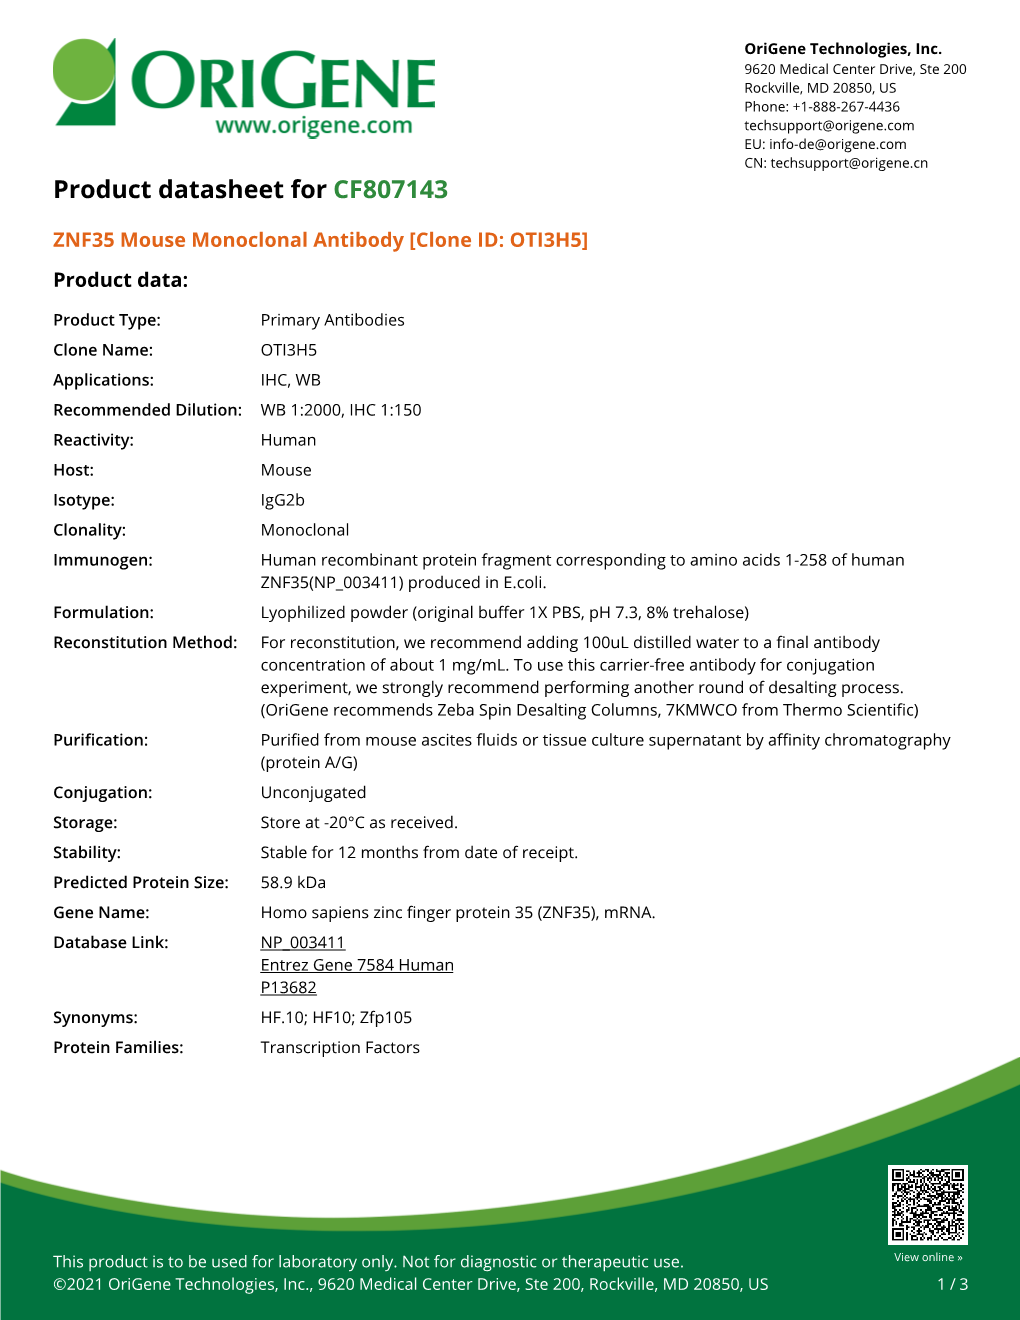 ZNF35 Mouse Monoclonal Antibody [Clone ID: OTI3H5] Product Data